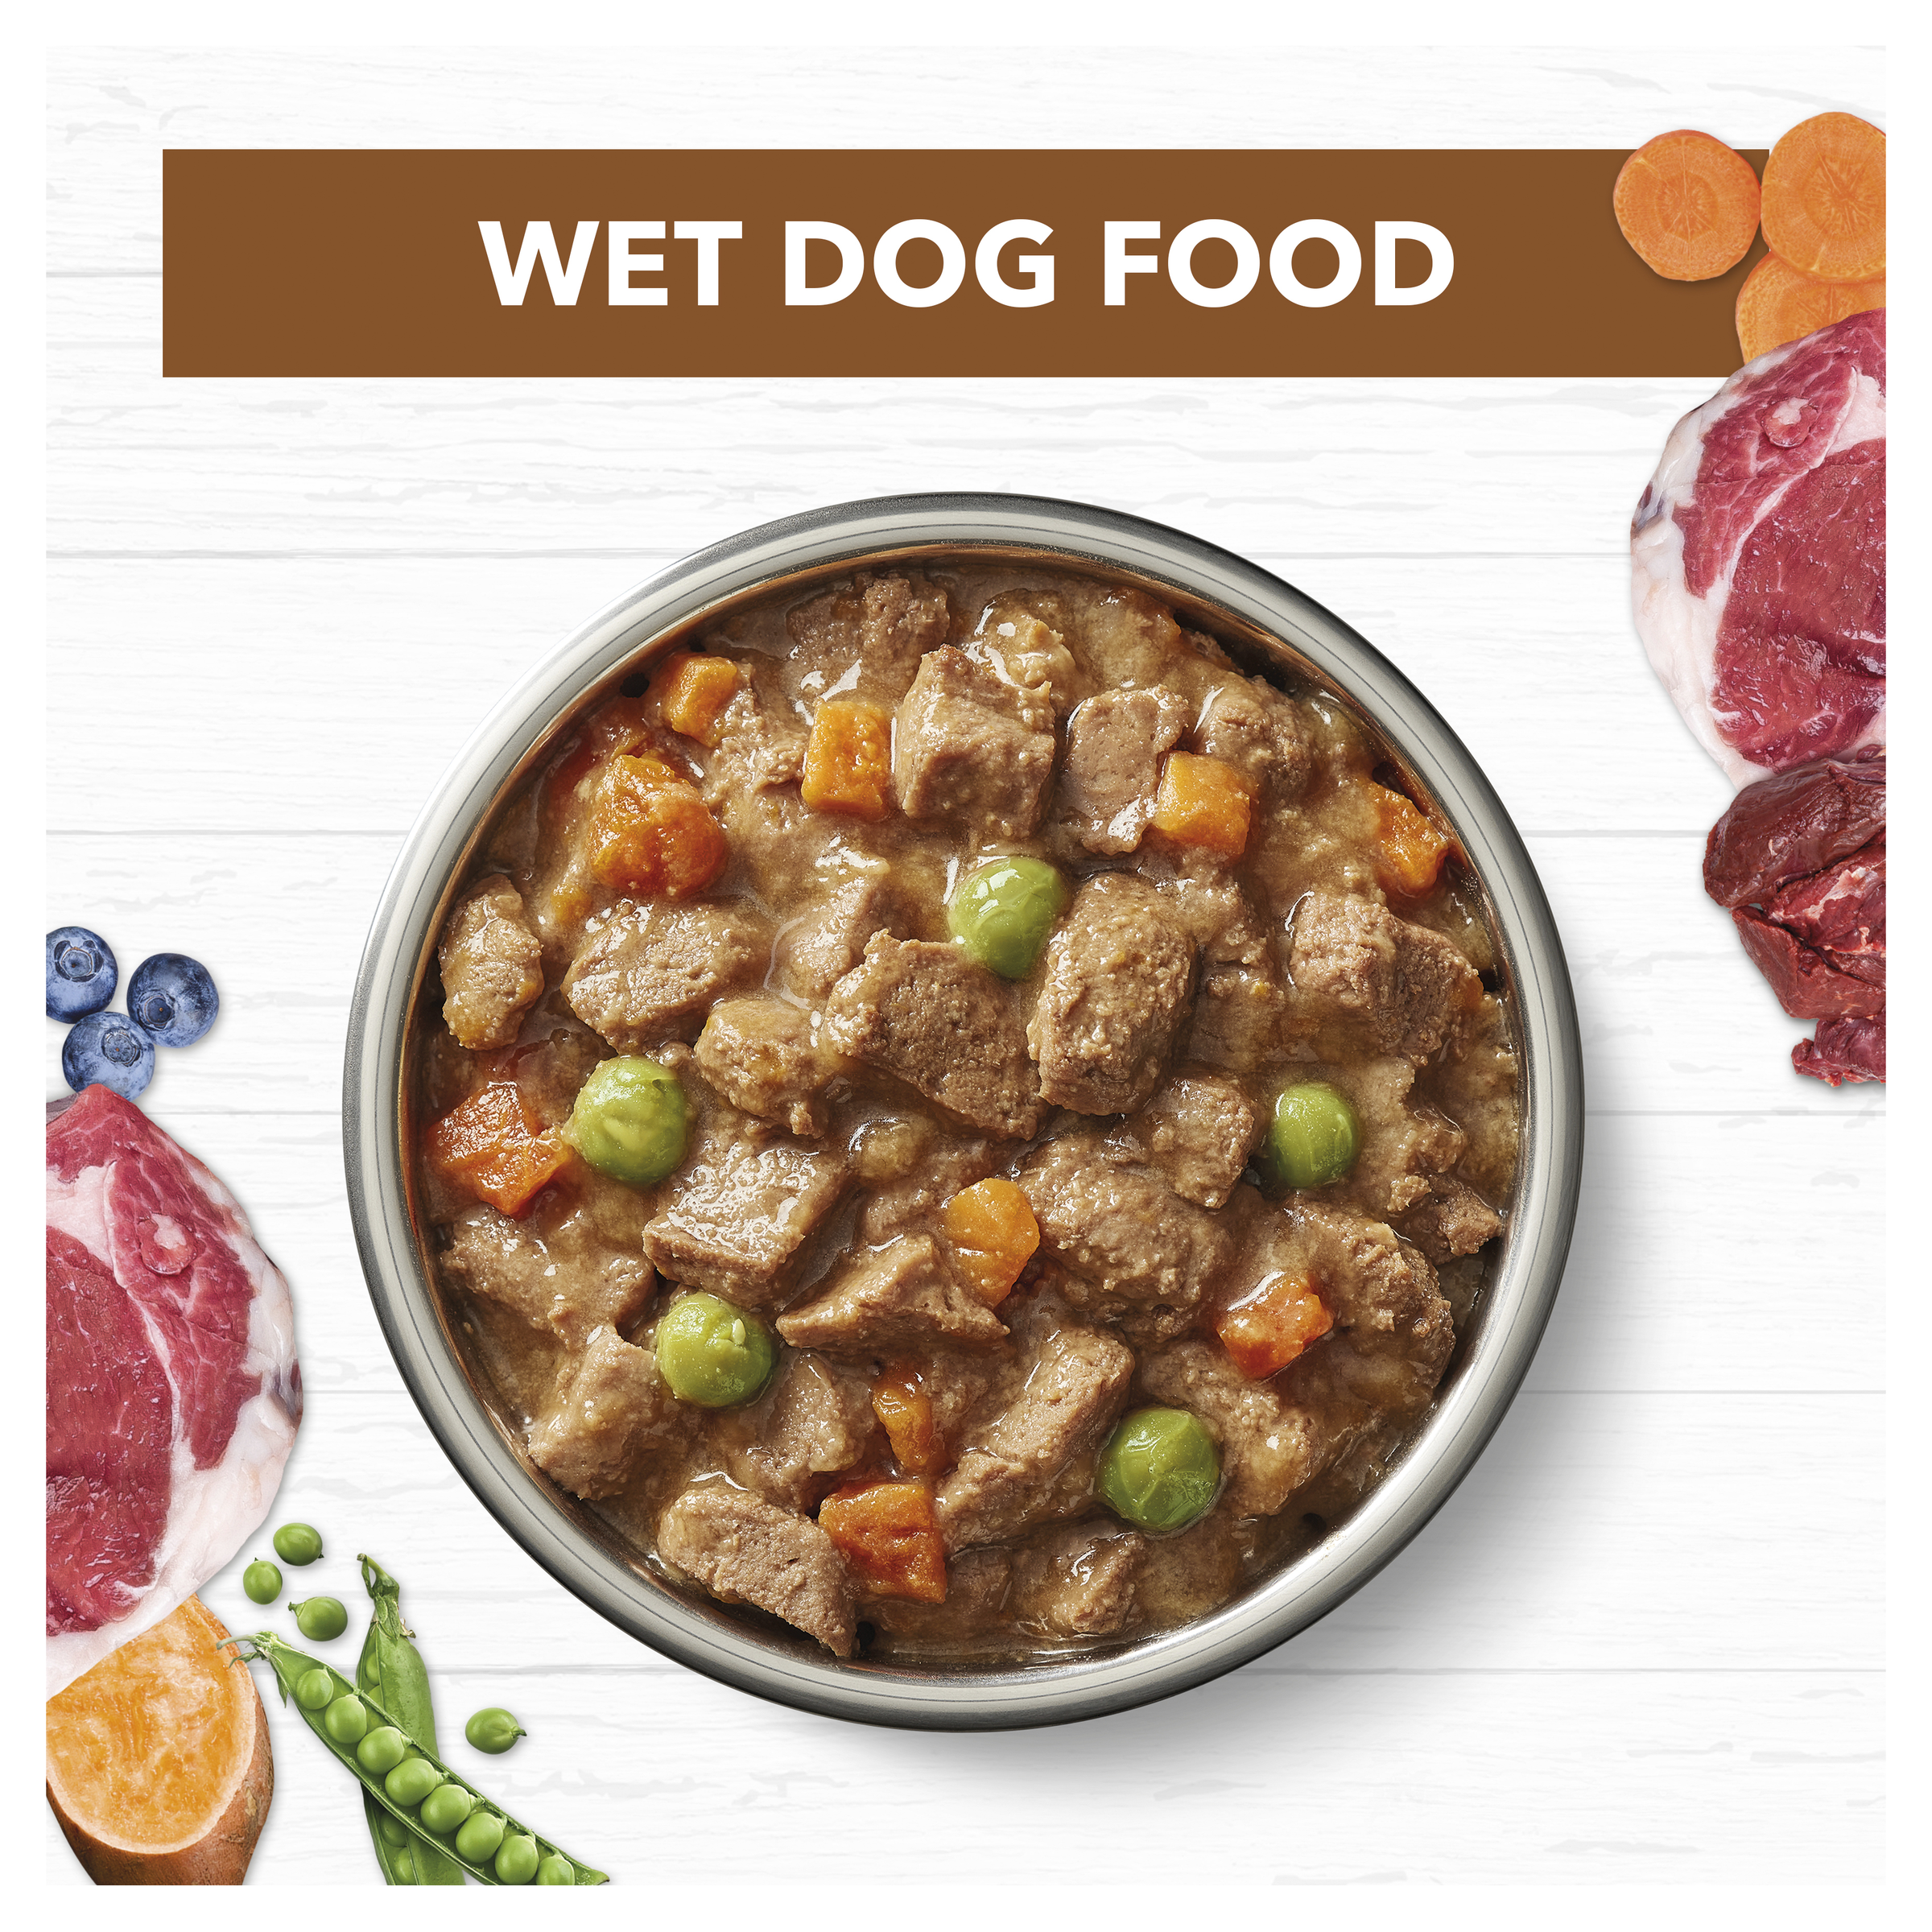 Ivory Coat Lamb and Kangaroo Stew Grain Free Wet Dog Food 12x400g